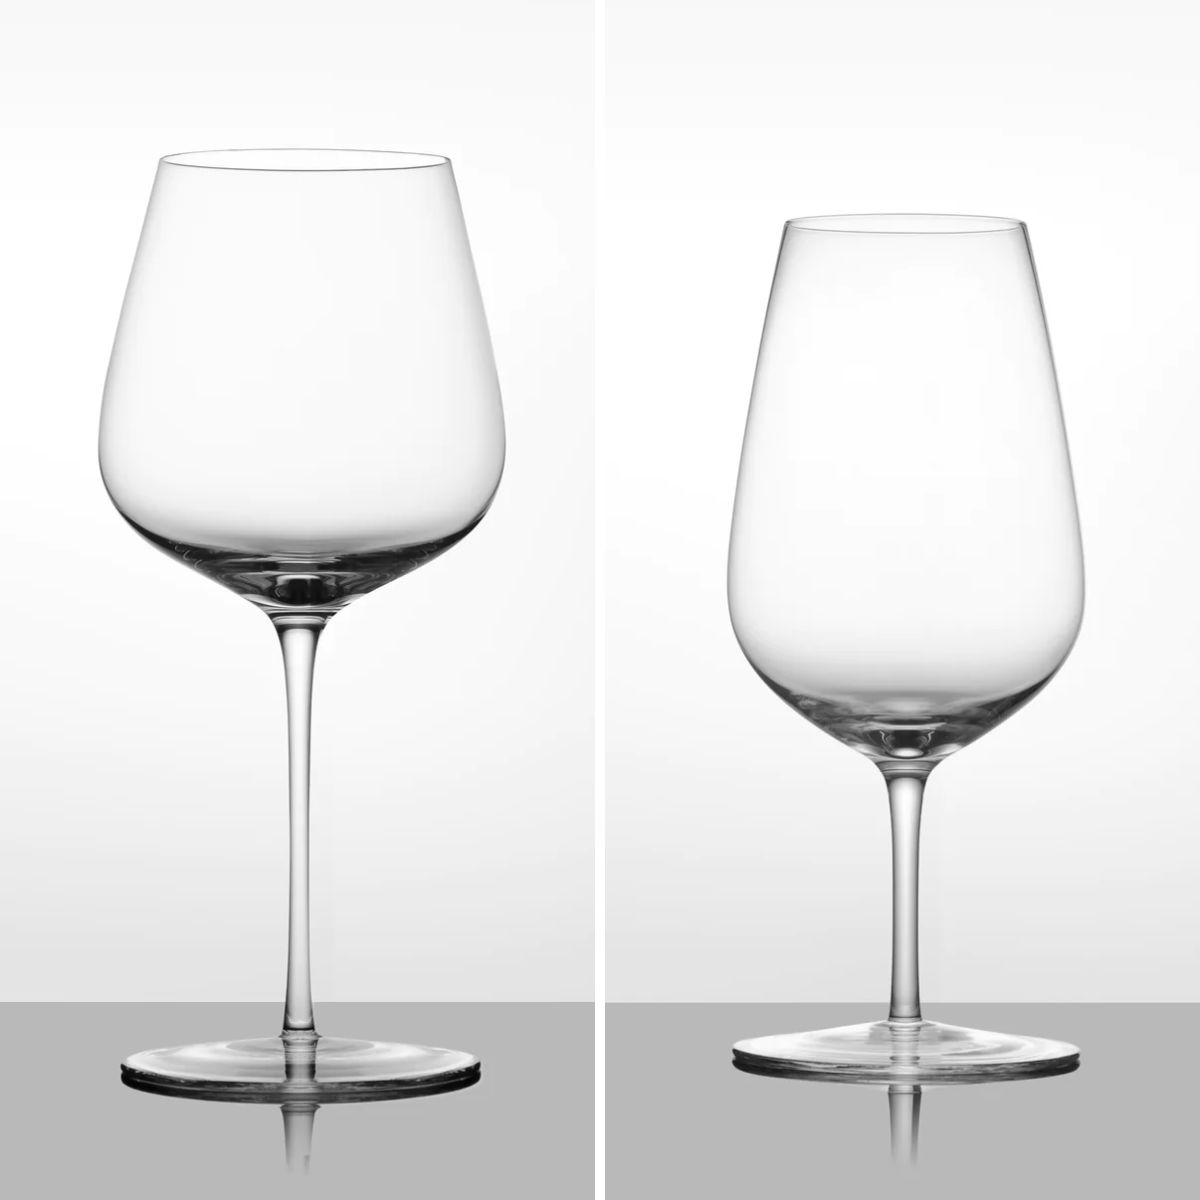 The Versatile Set wedding glassware from Glasvin